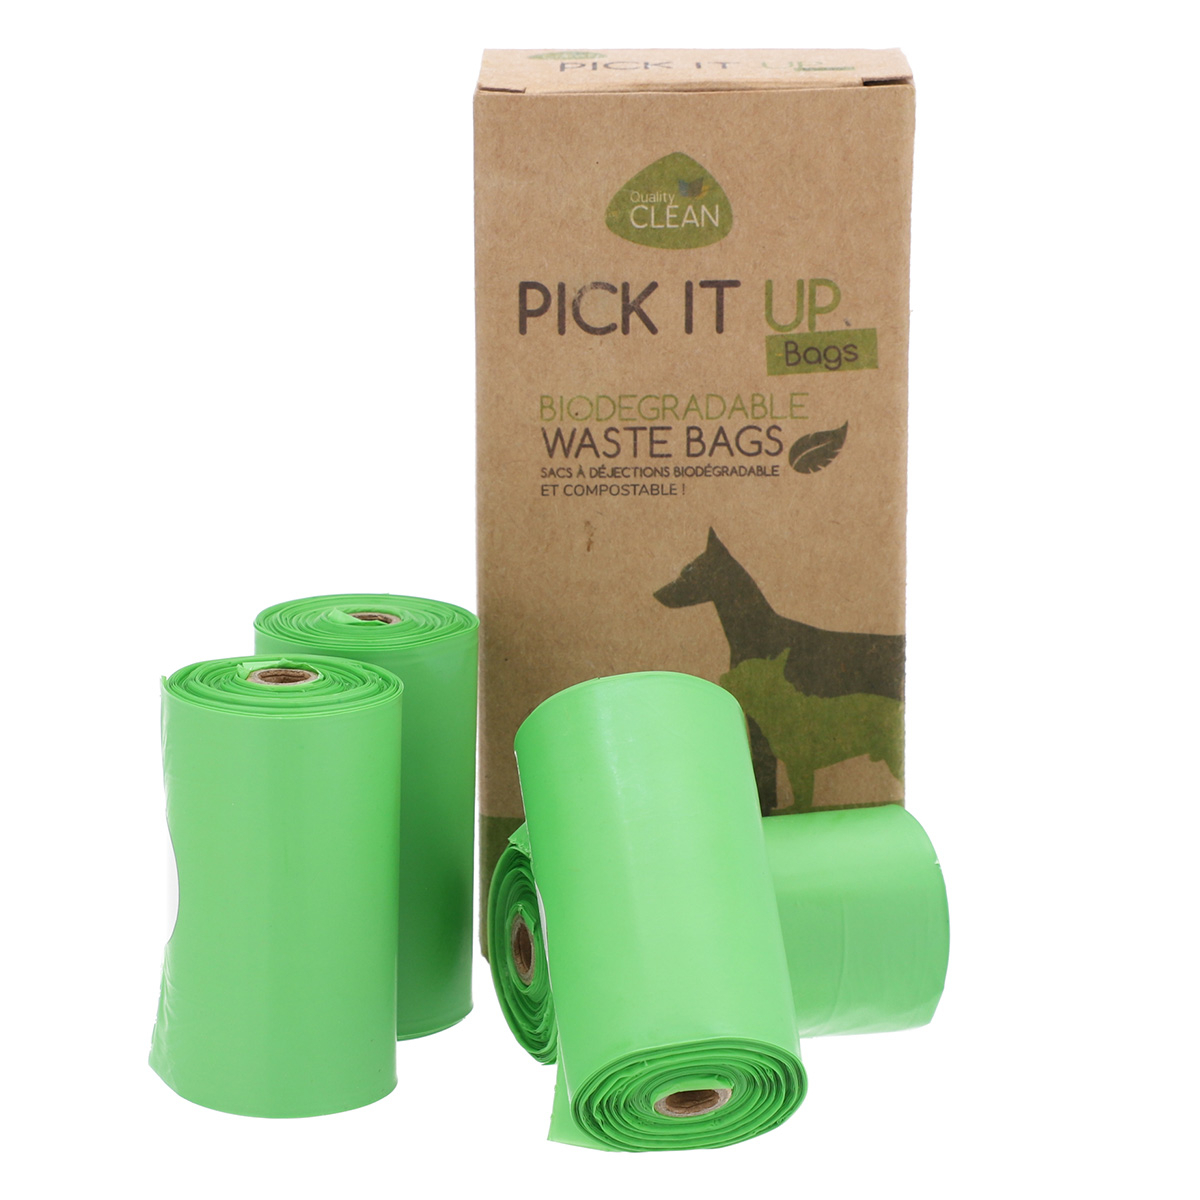 Sacchetti igienici biodegradabili e compostabili PICK IT UP BAGS